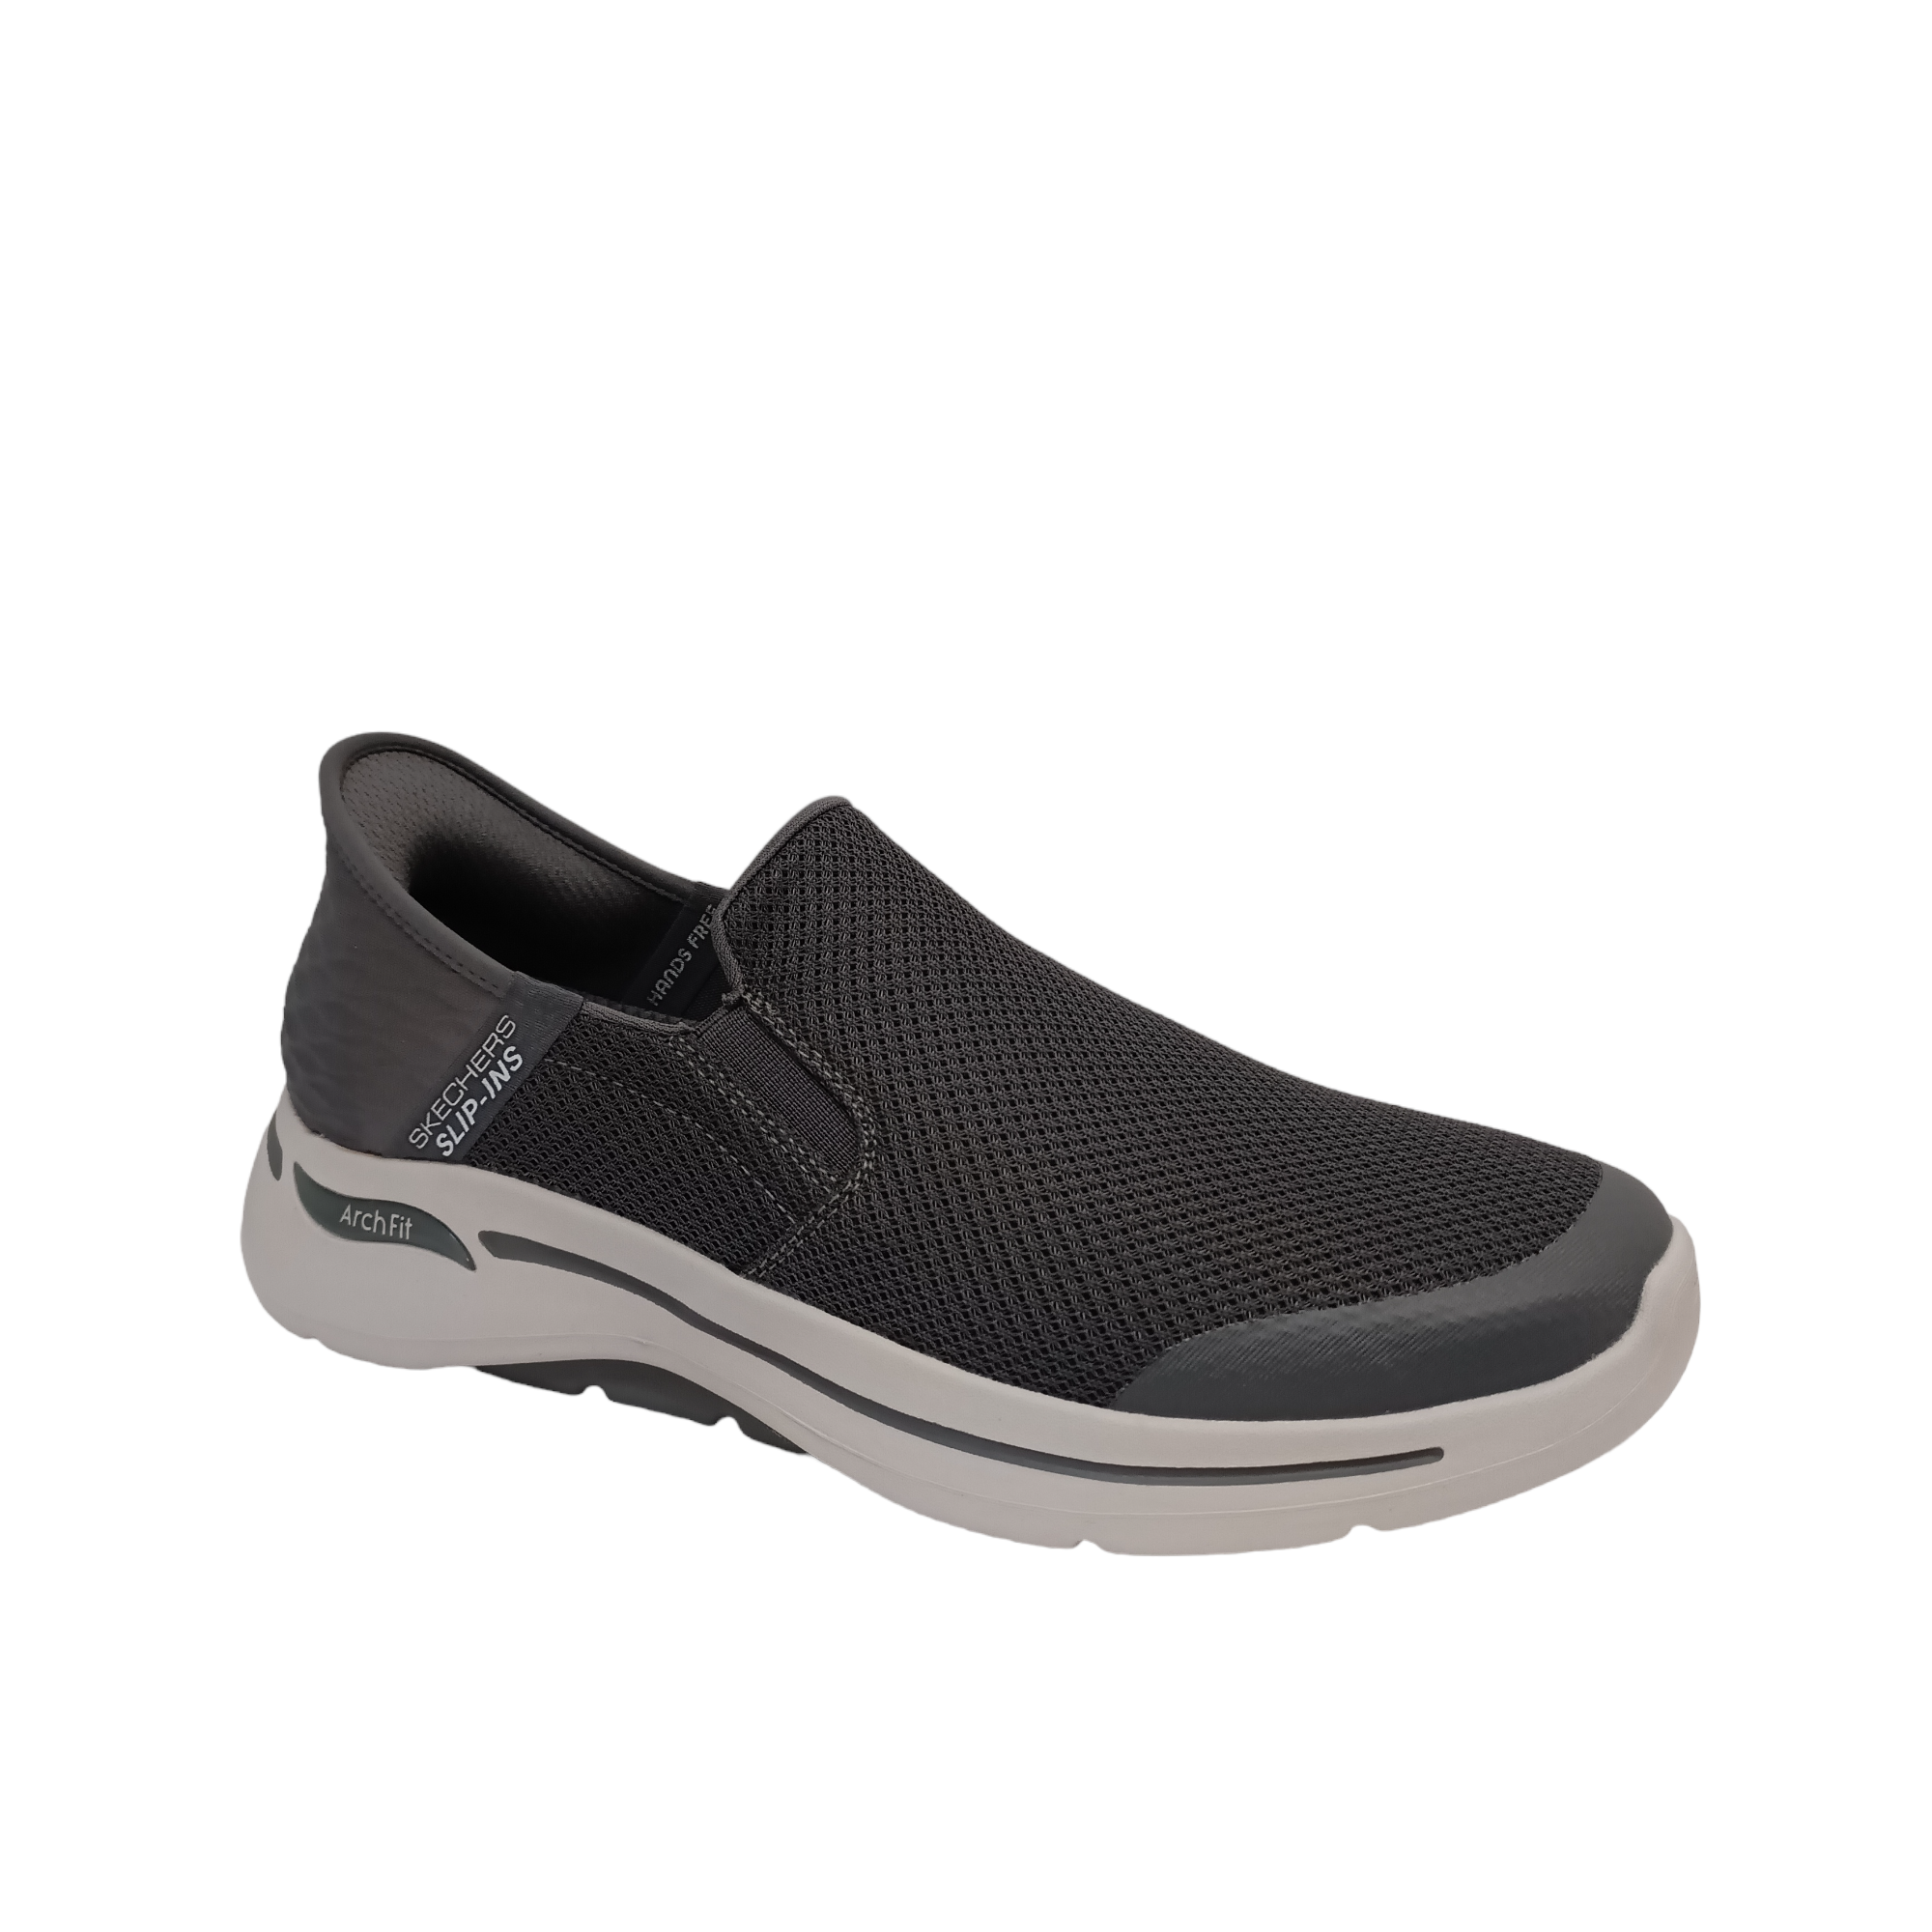 GW Arch Fit - shoe&amp;me - Skechers - Sneakers - Mens, Sneakers, Summer